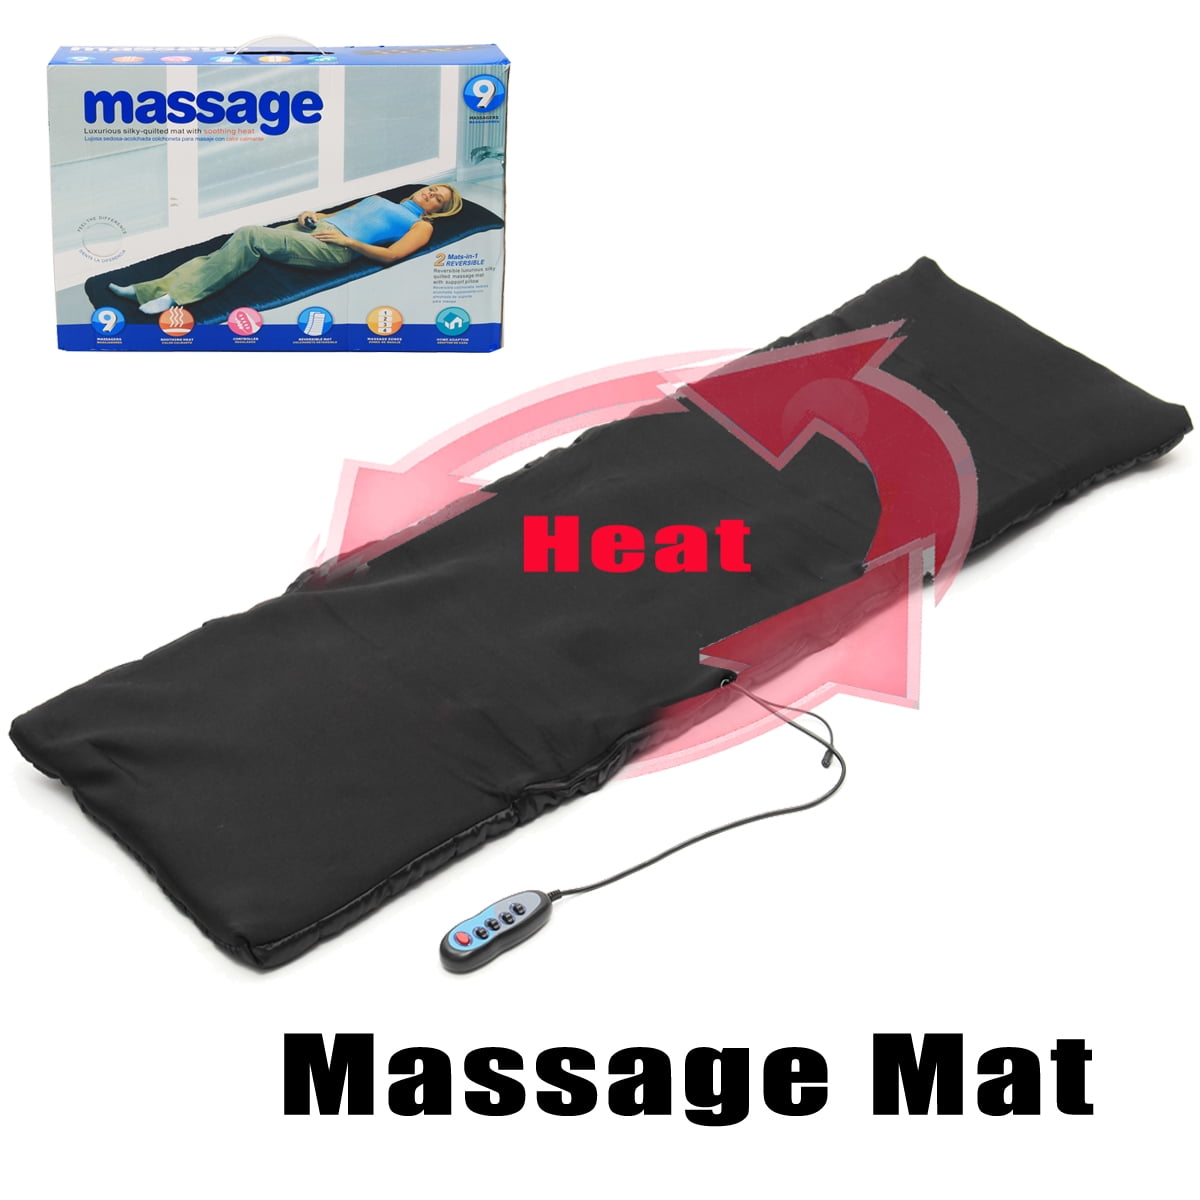 Heated Massage Mat Mattress Full Body Massager Remote Control Cushion Sofa Bed Walmart Canada